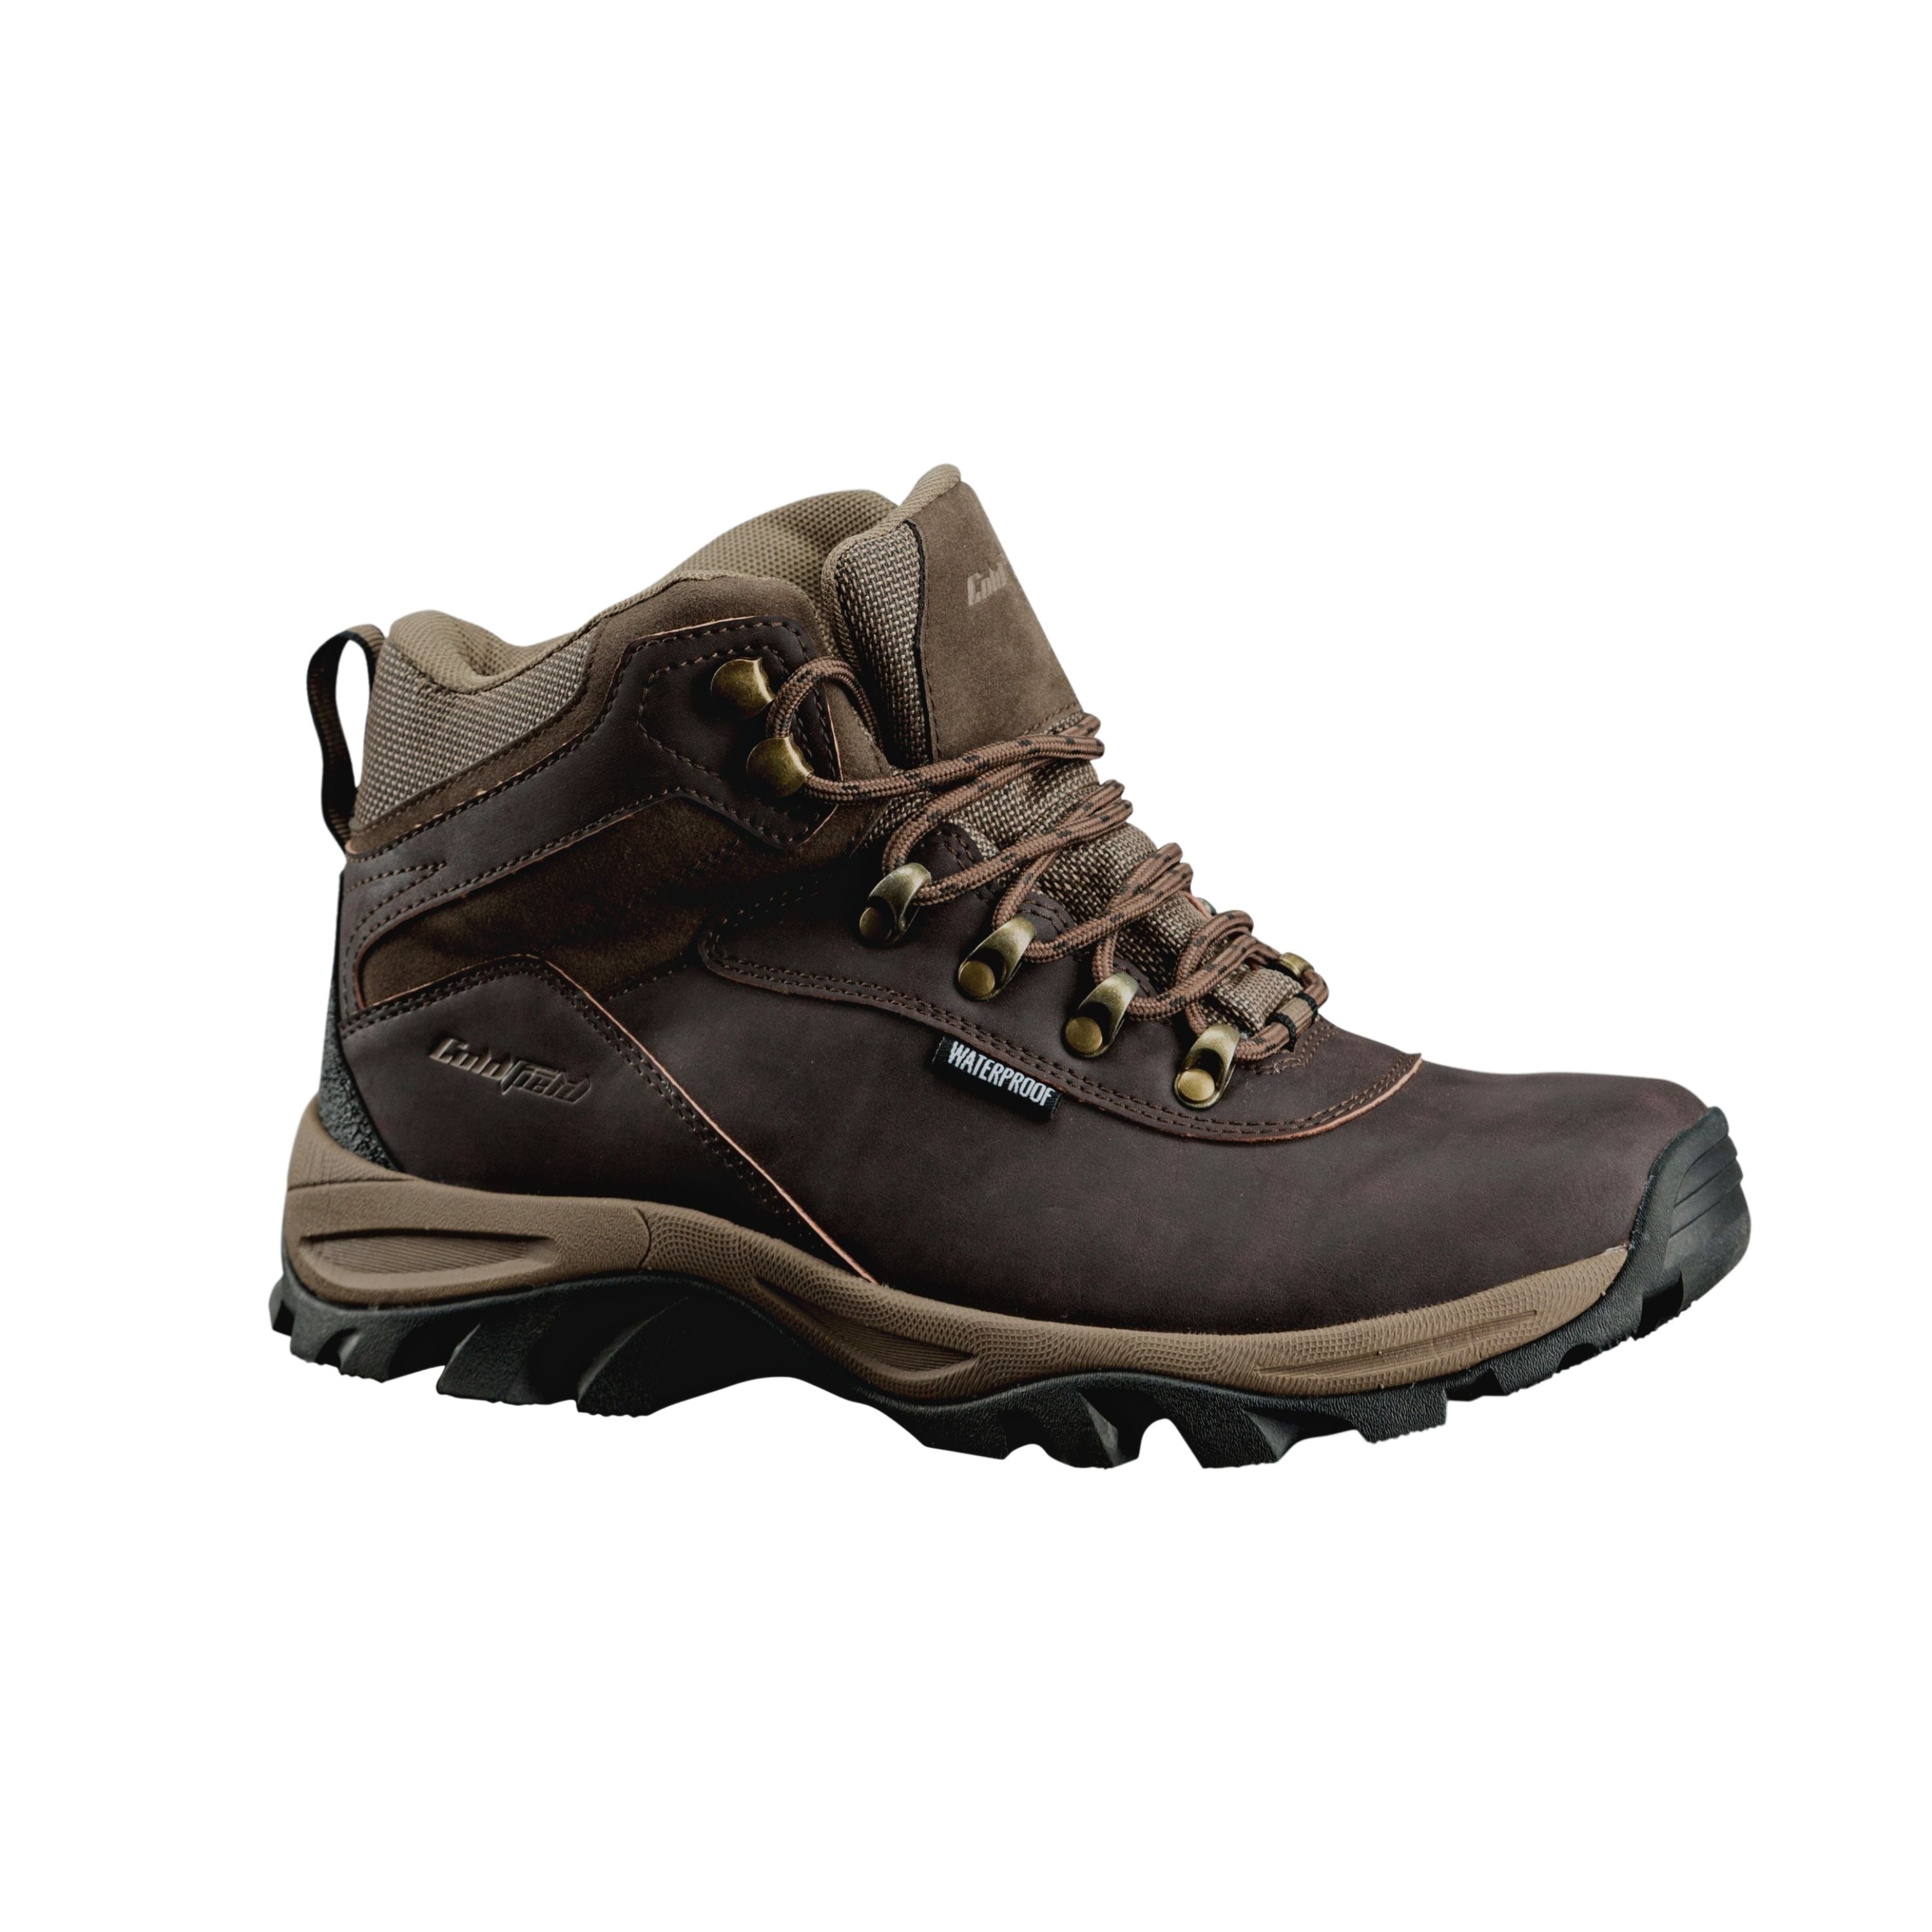 "Protrail" hiking boots - Men's